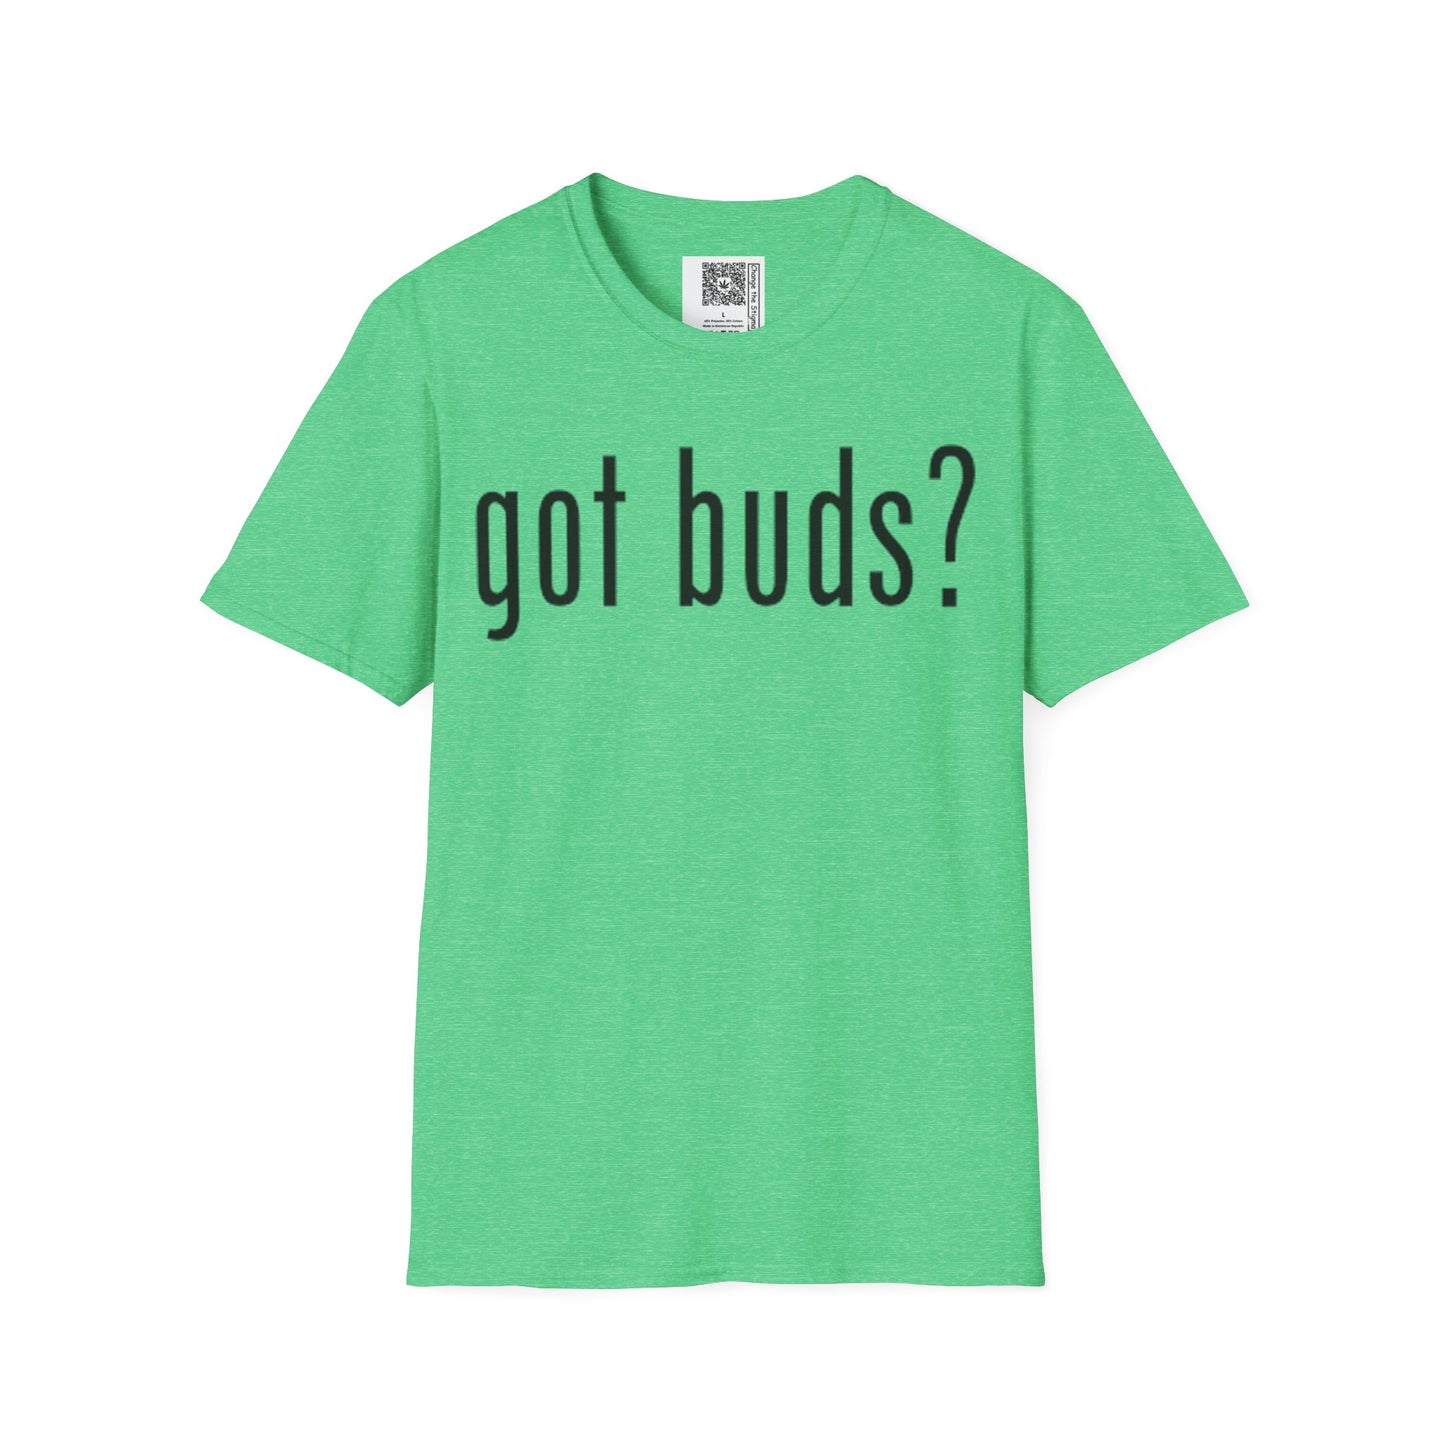 Change the Stigma GOT BUDS Weed Shirt